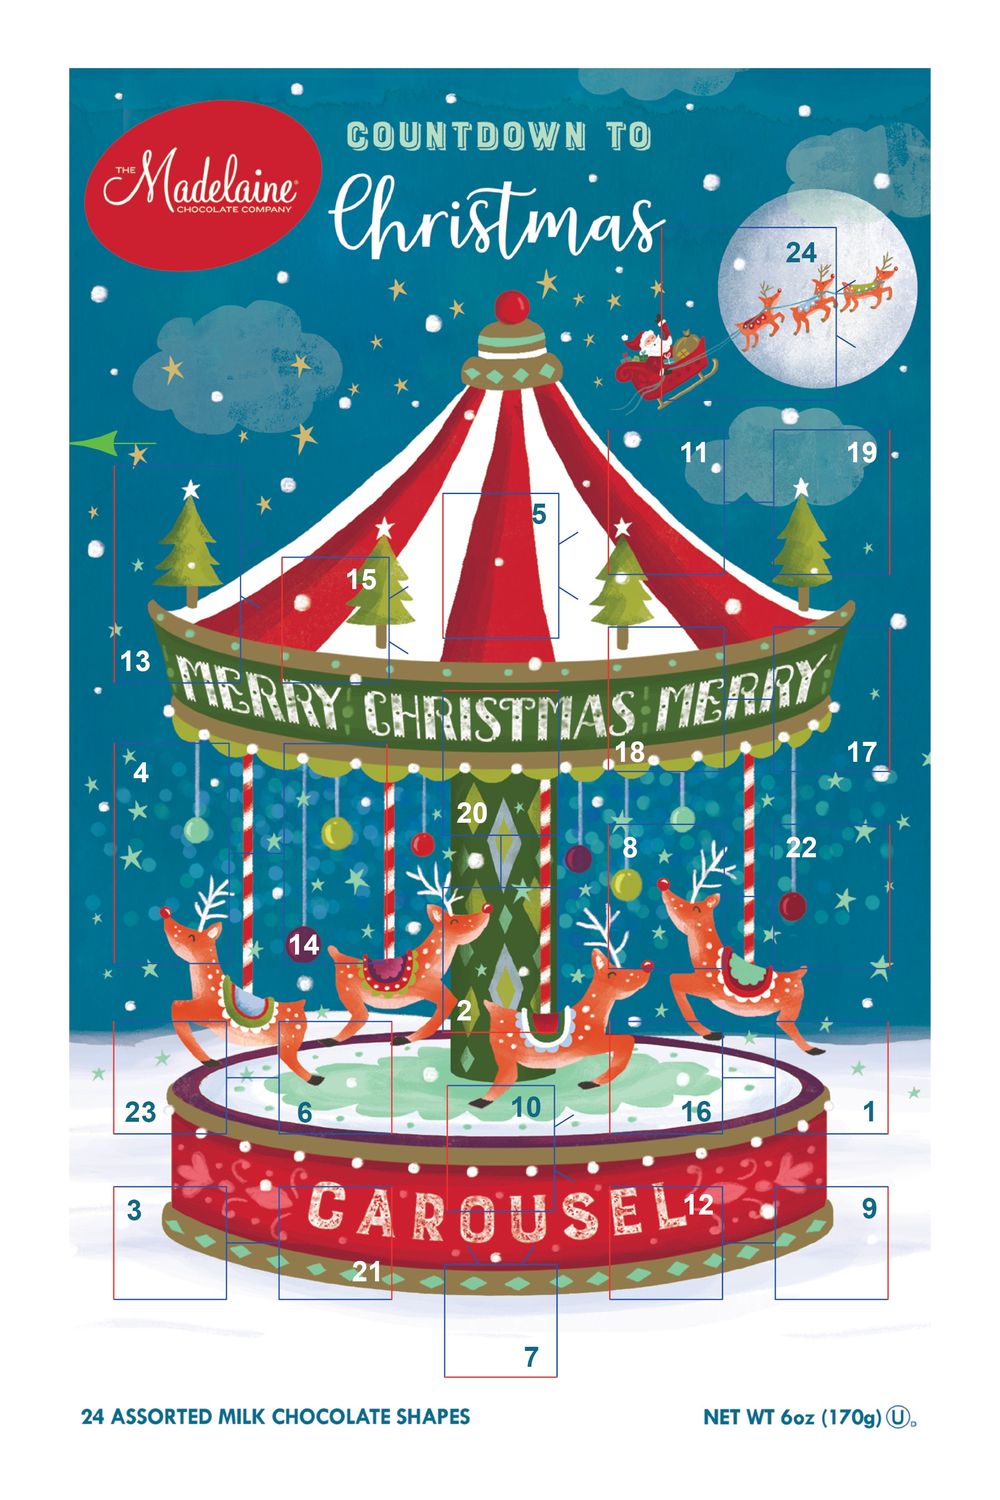 Carousel Advent calendar